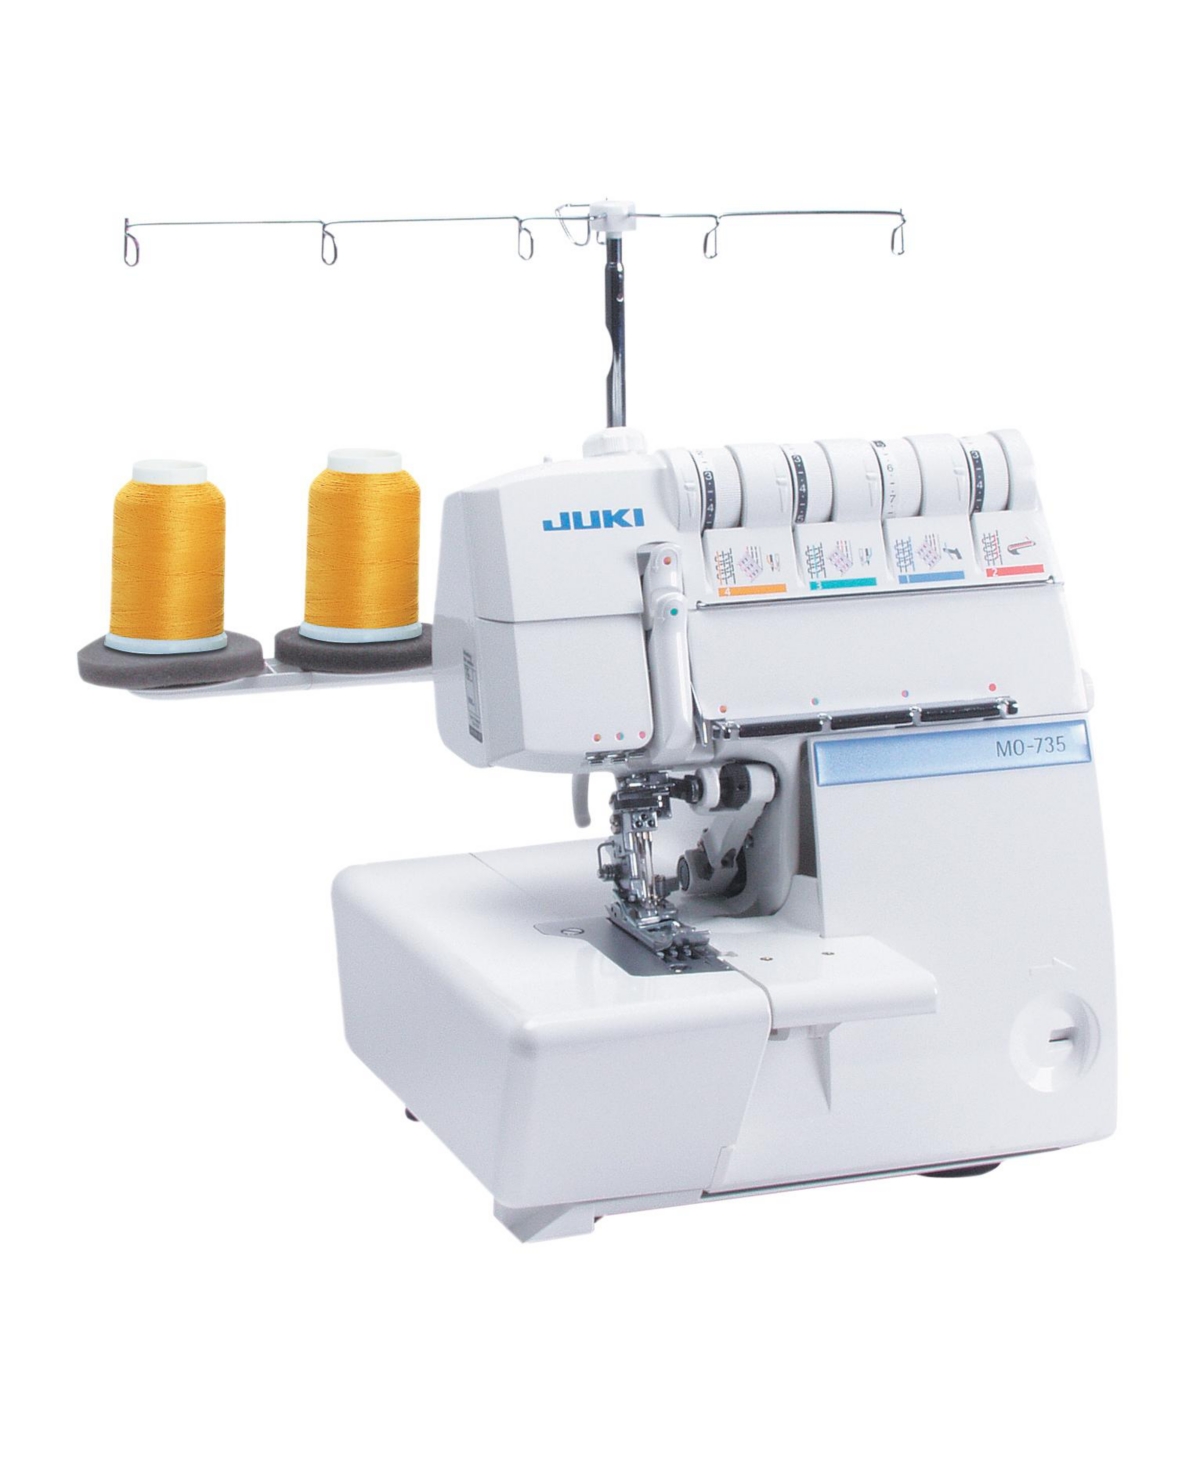 Mo-735 2/3/4/5 Thread Serger Sewing Machine - White